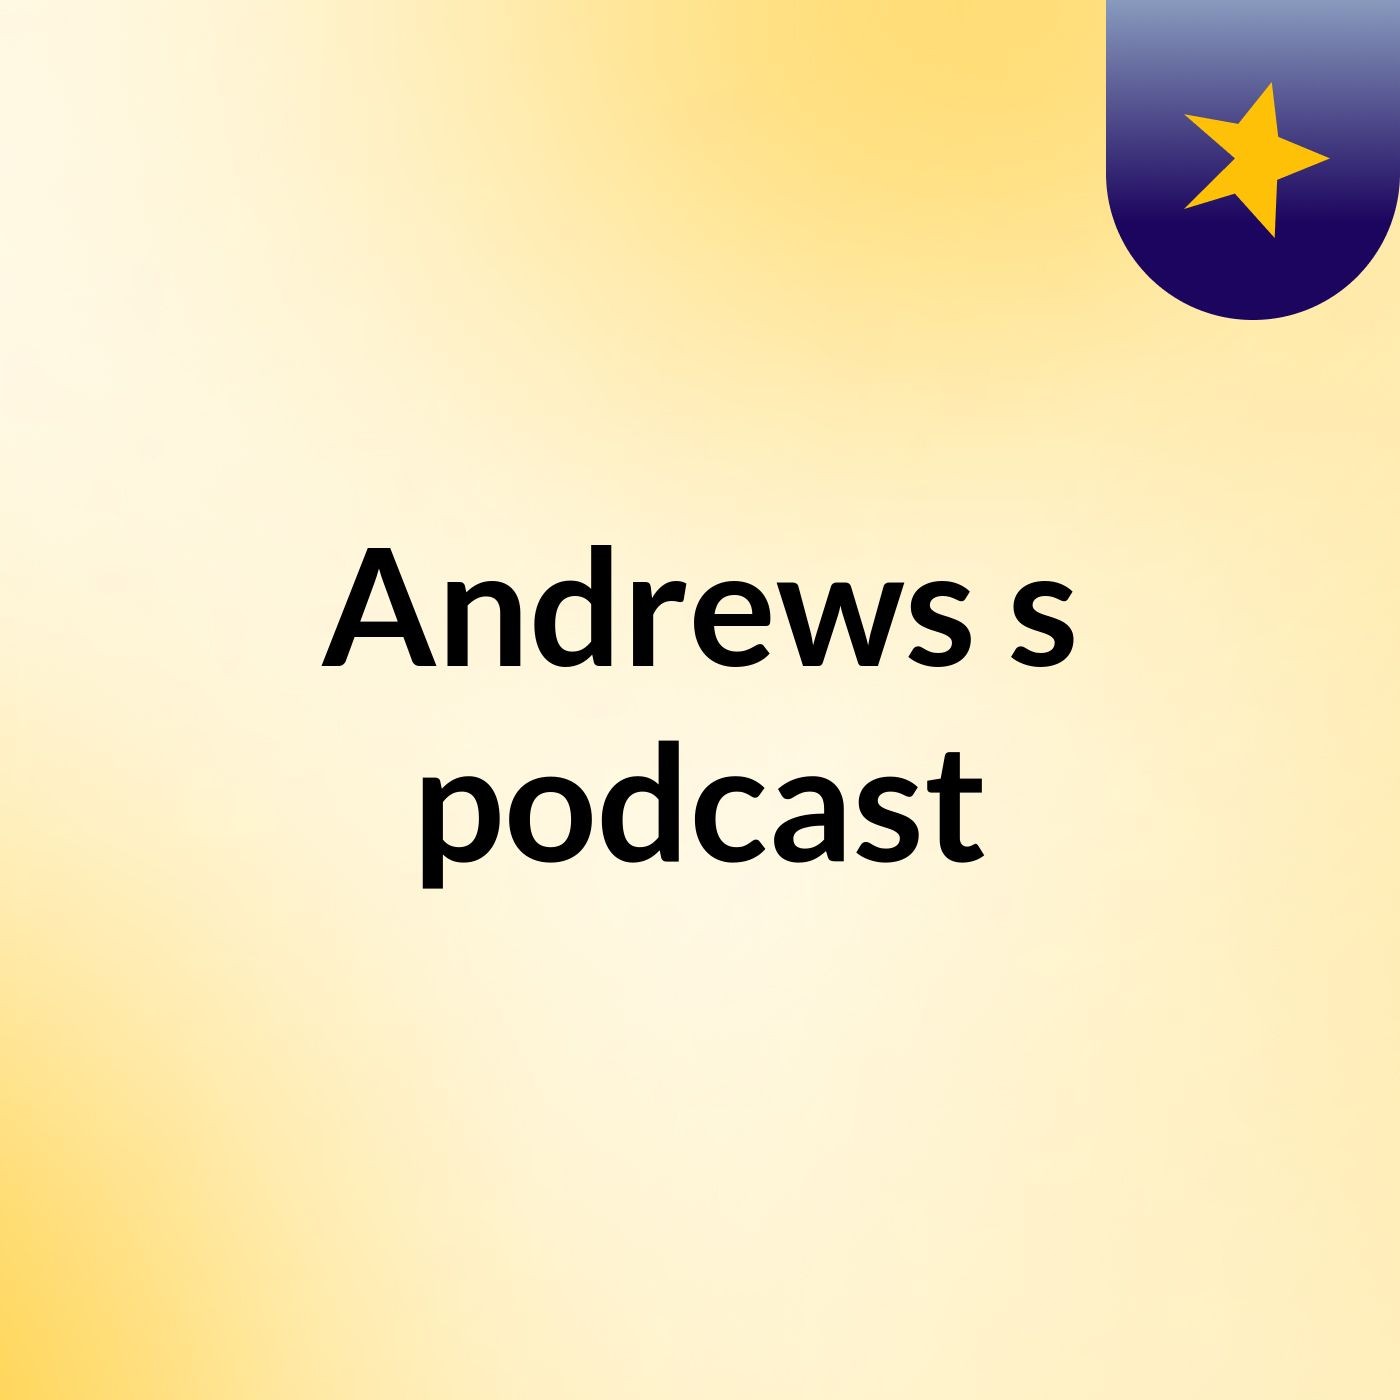 Andrews's podcast